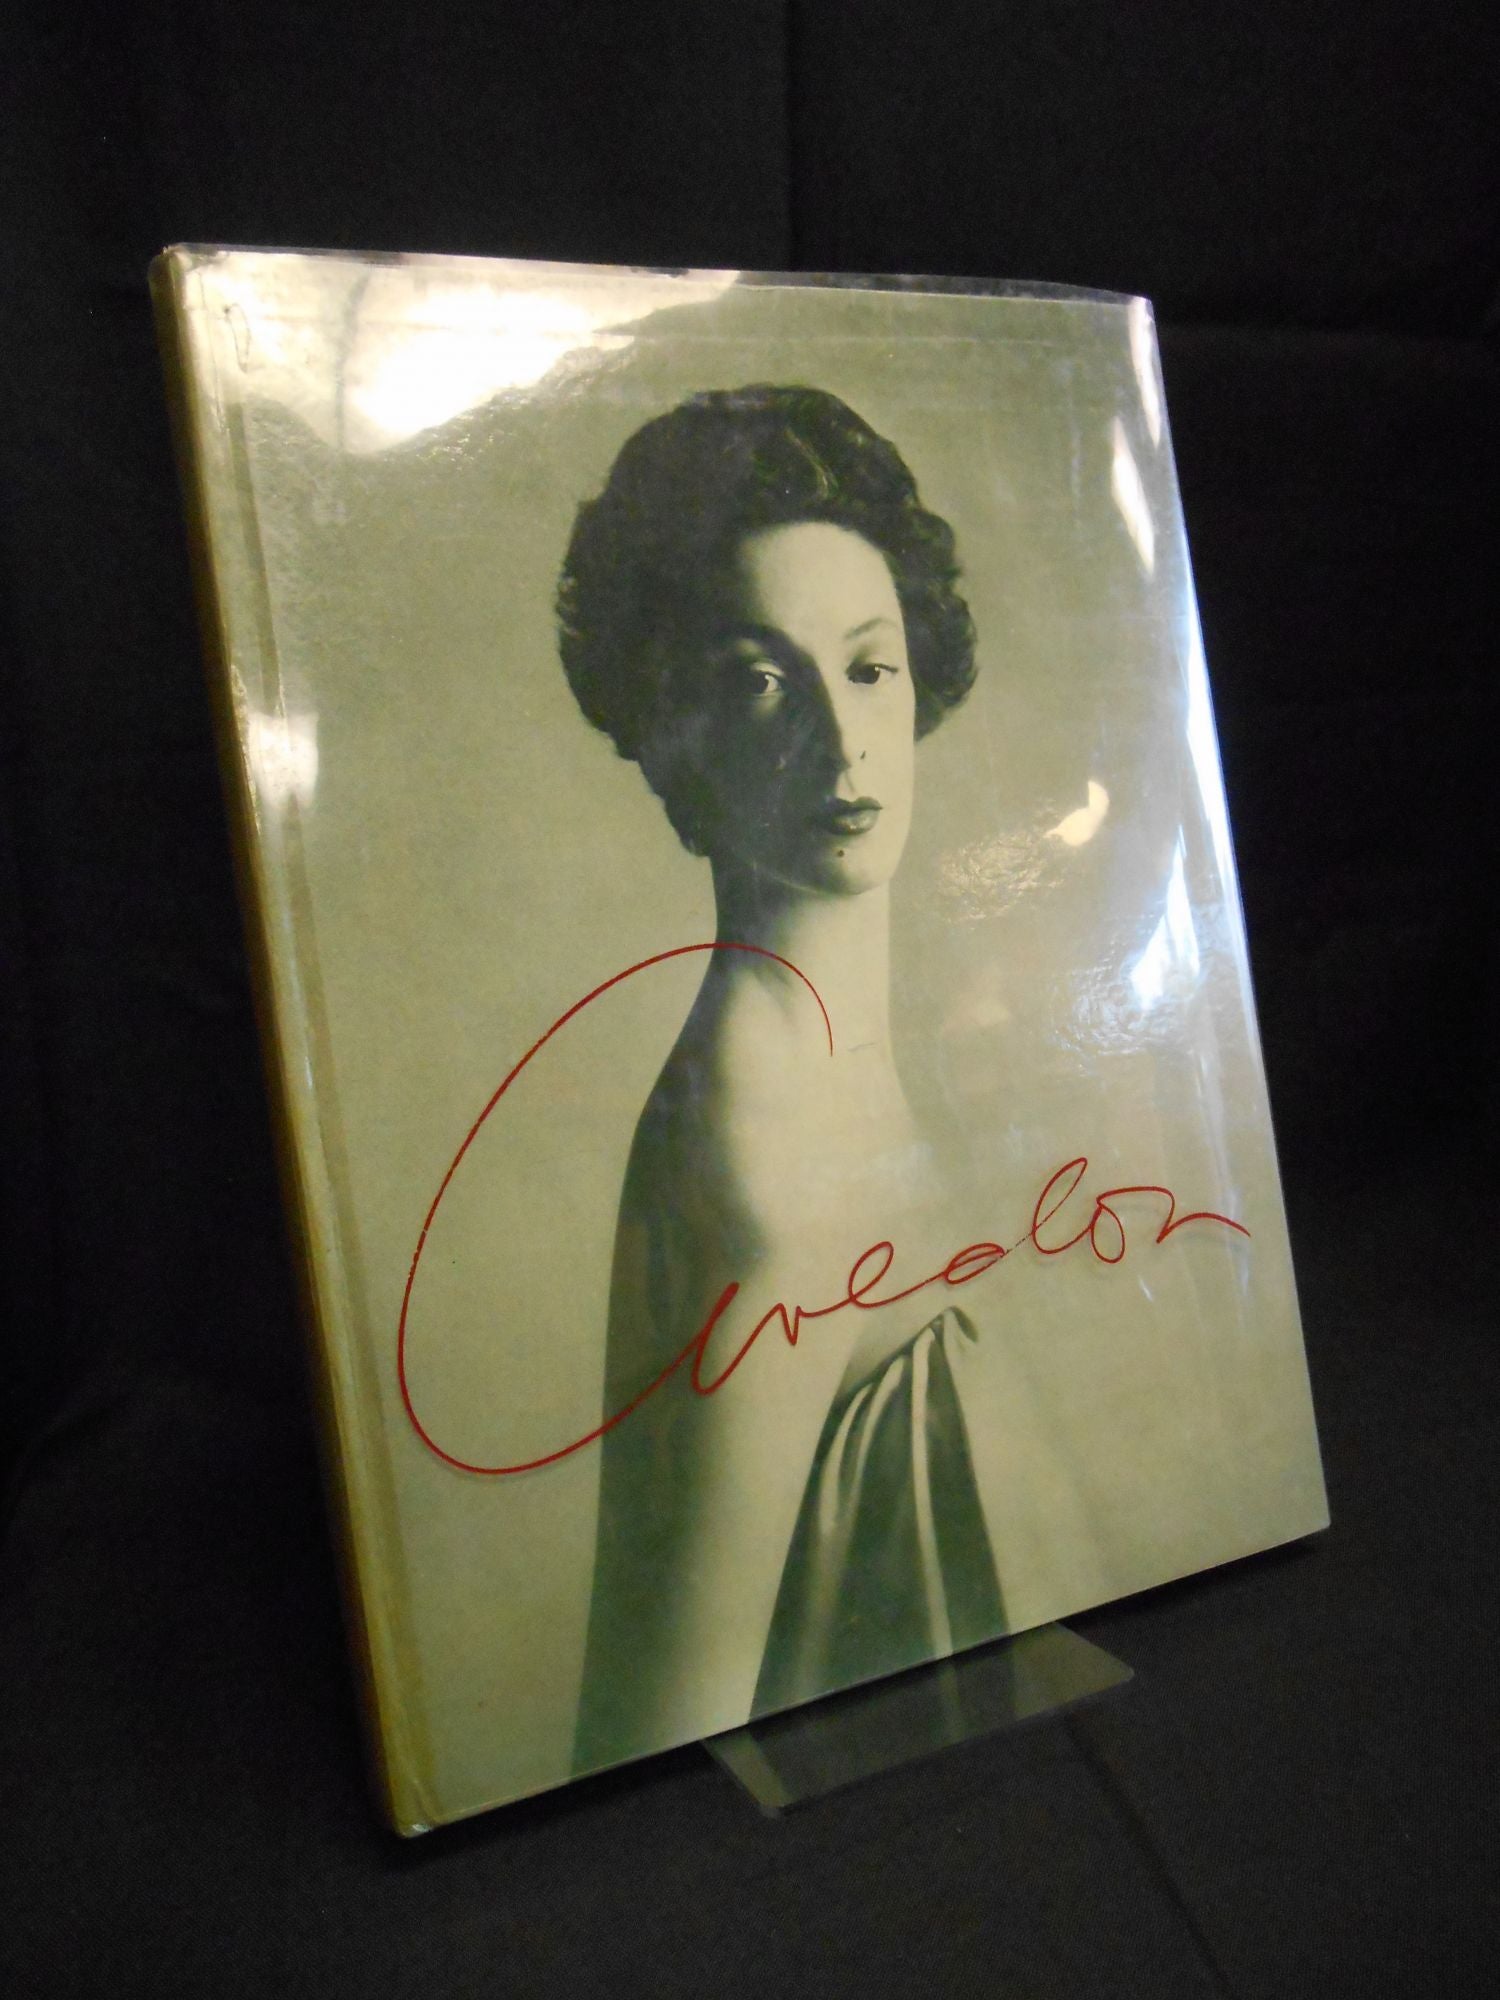 Avedon, Photographs 1947-1977 by Harold Brodkey, Richard Avedon,  Introductory Essay on Swan's Fine Books